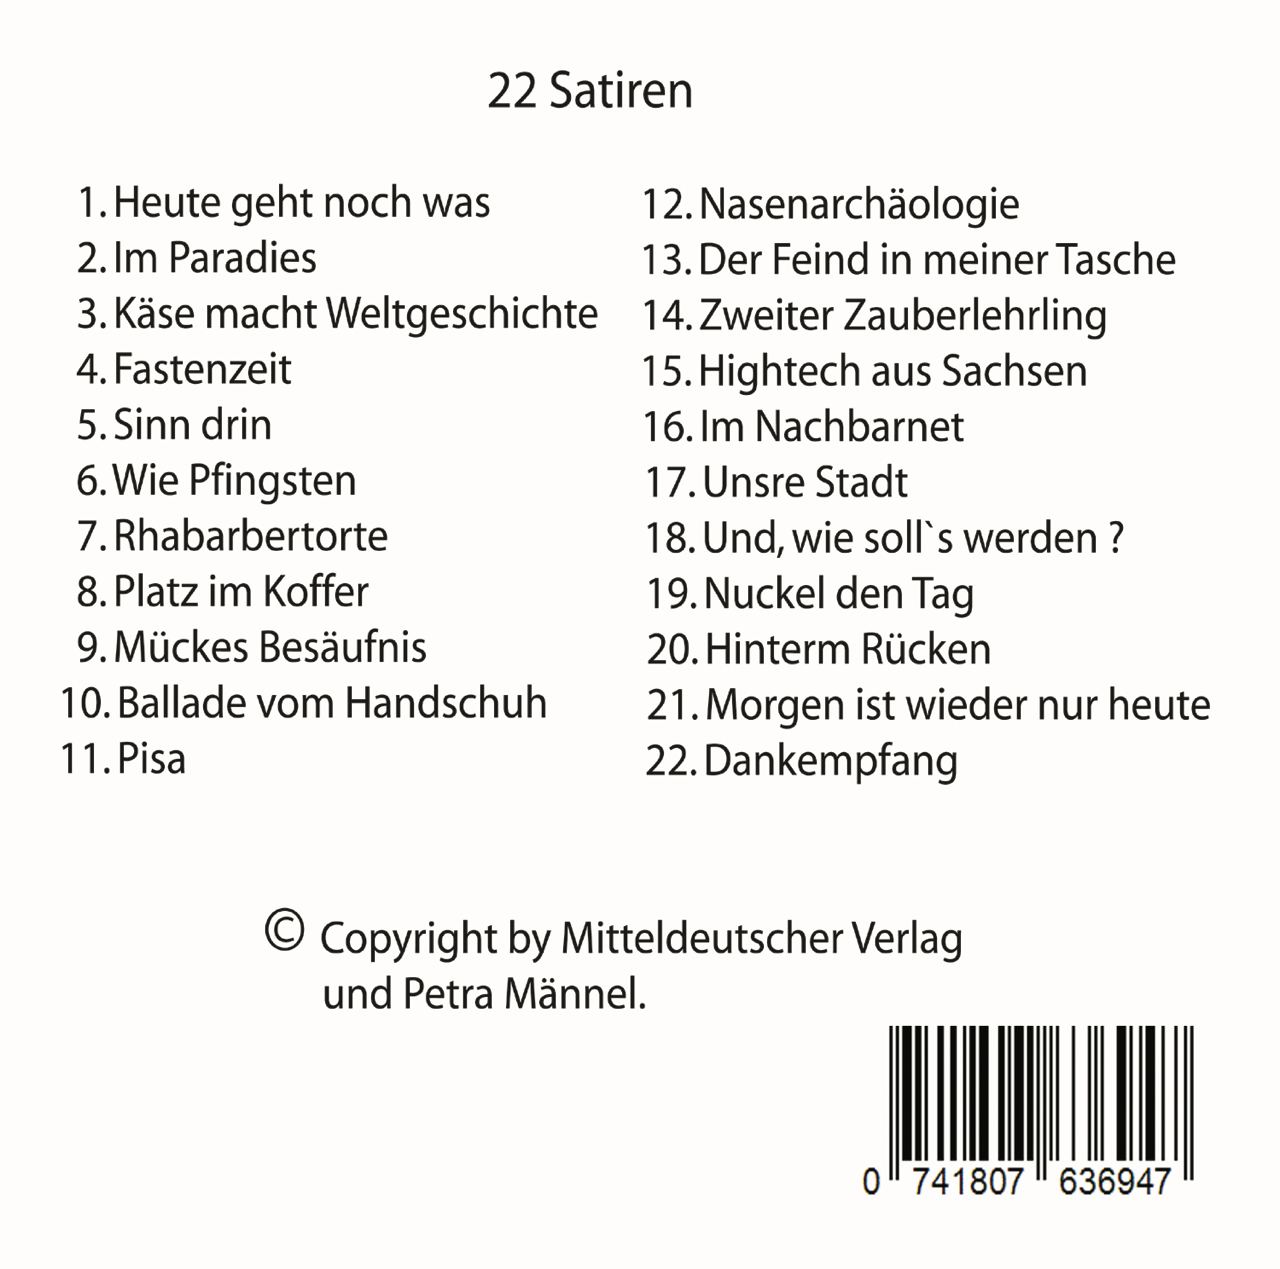 22 Satiren (Hörbuch-CD)